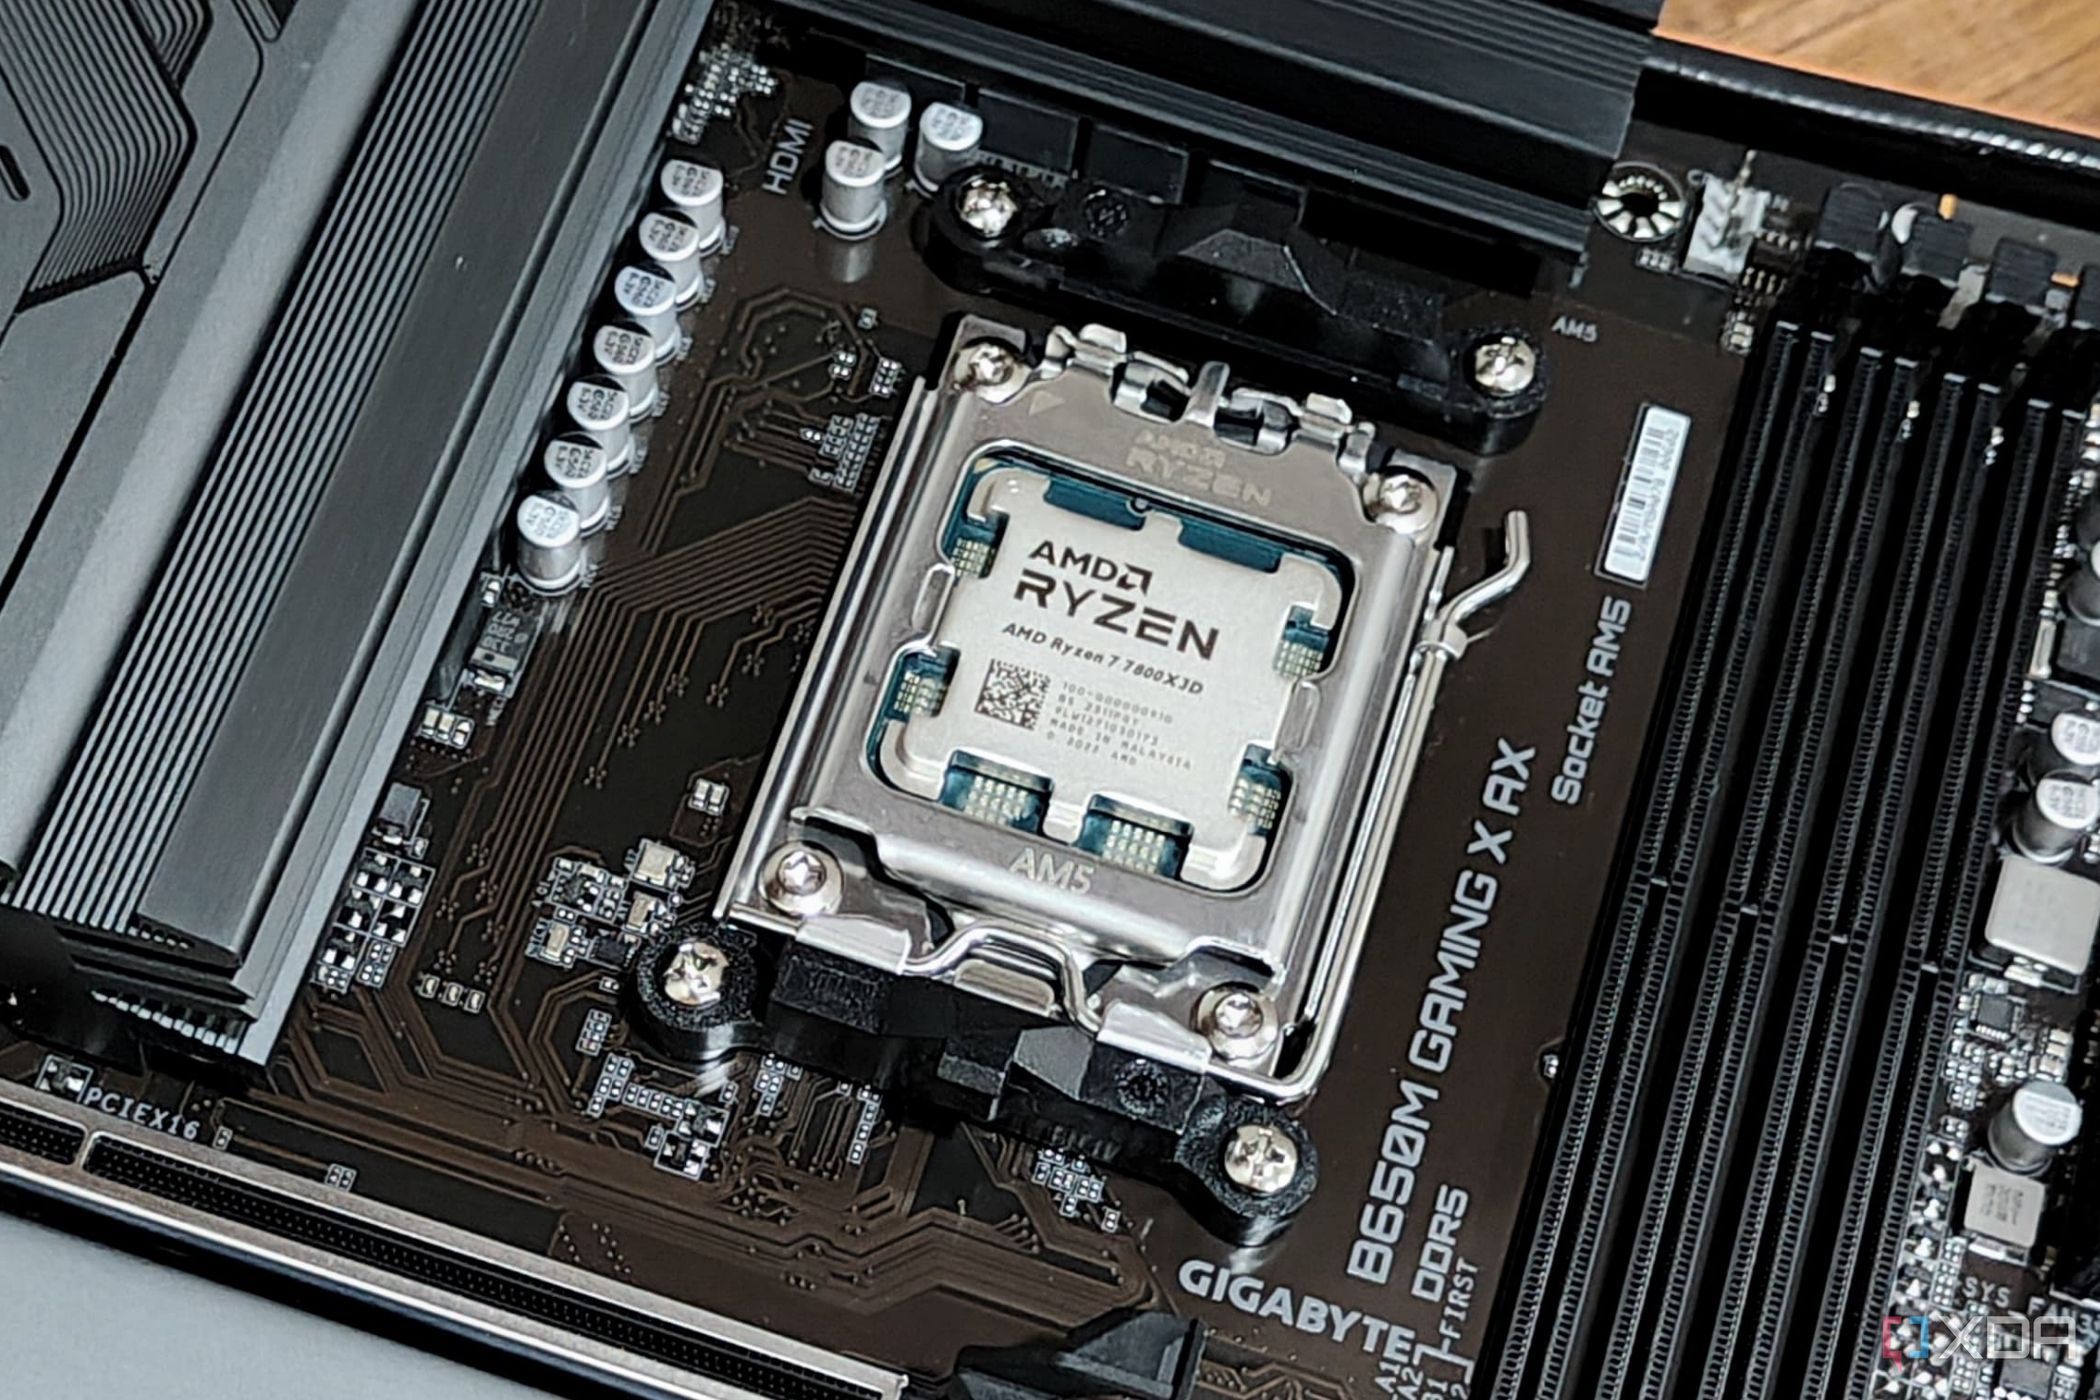 Best motherboard for Ryzen 7 7800X3D in 2024